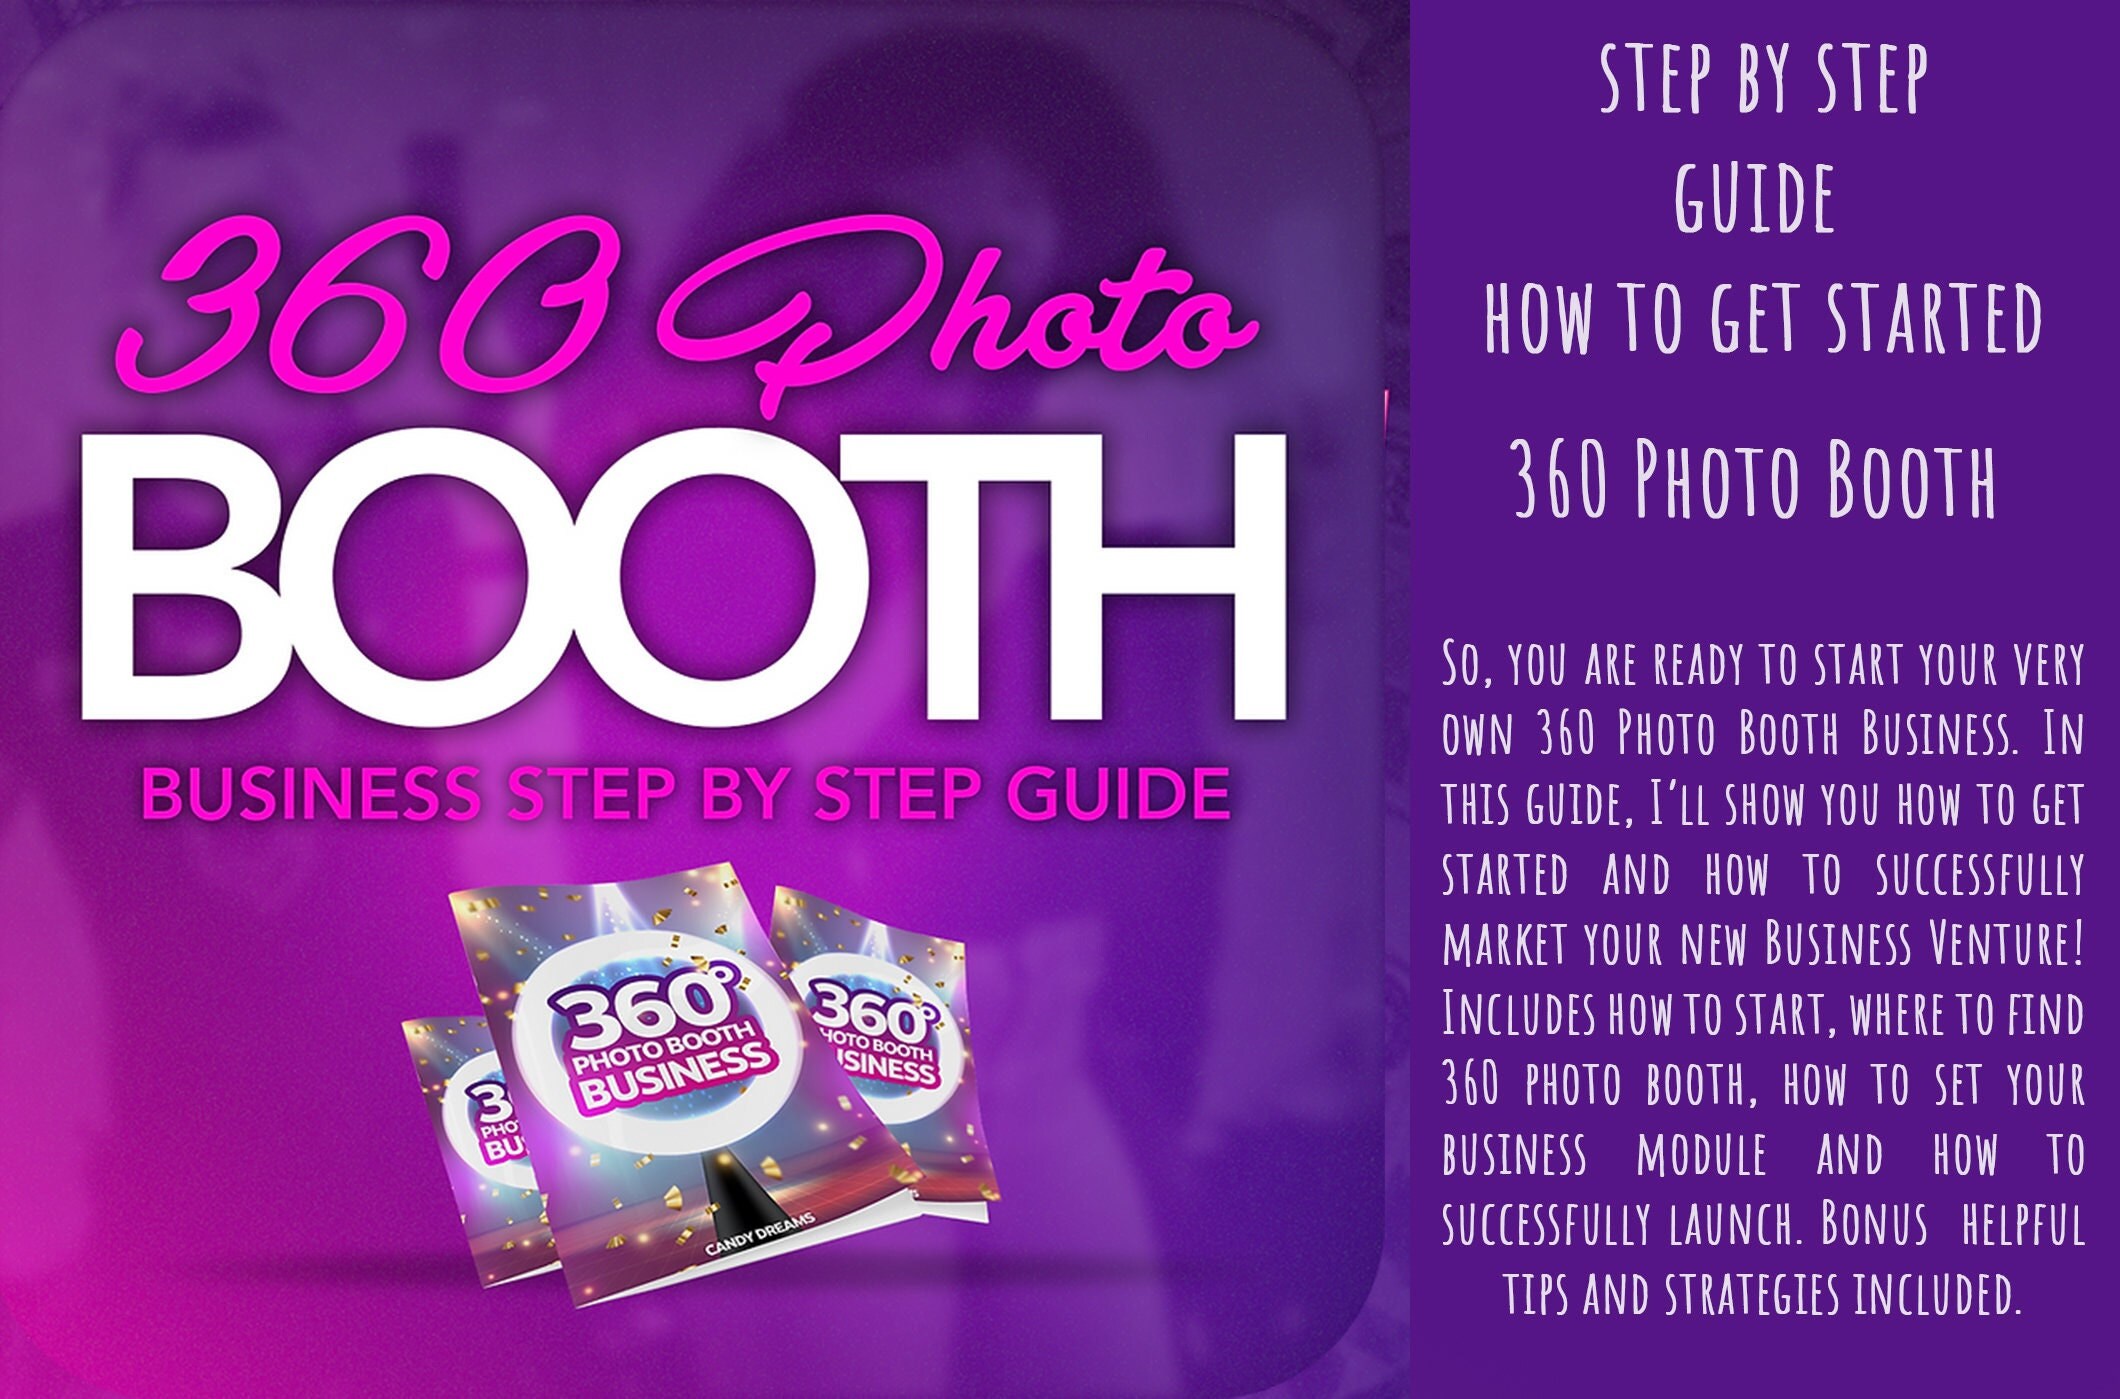 360 photo booth business plan pdf